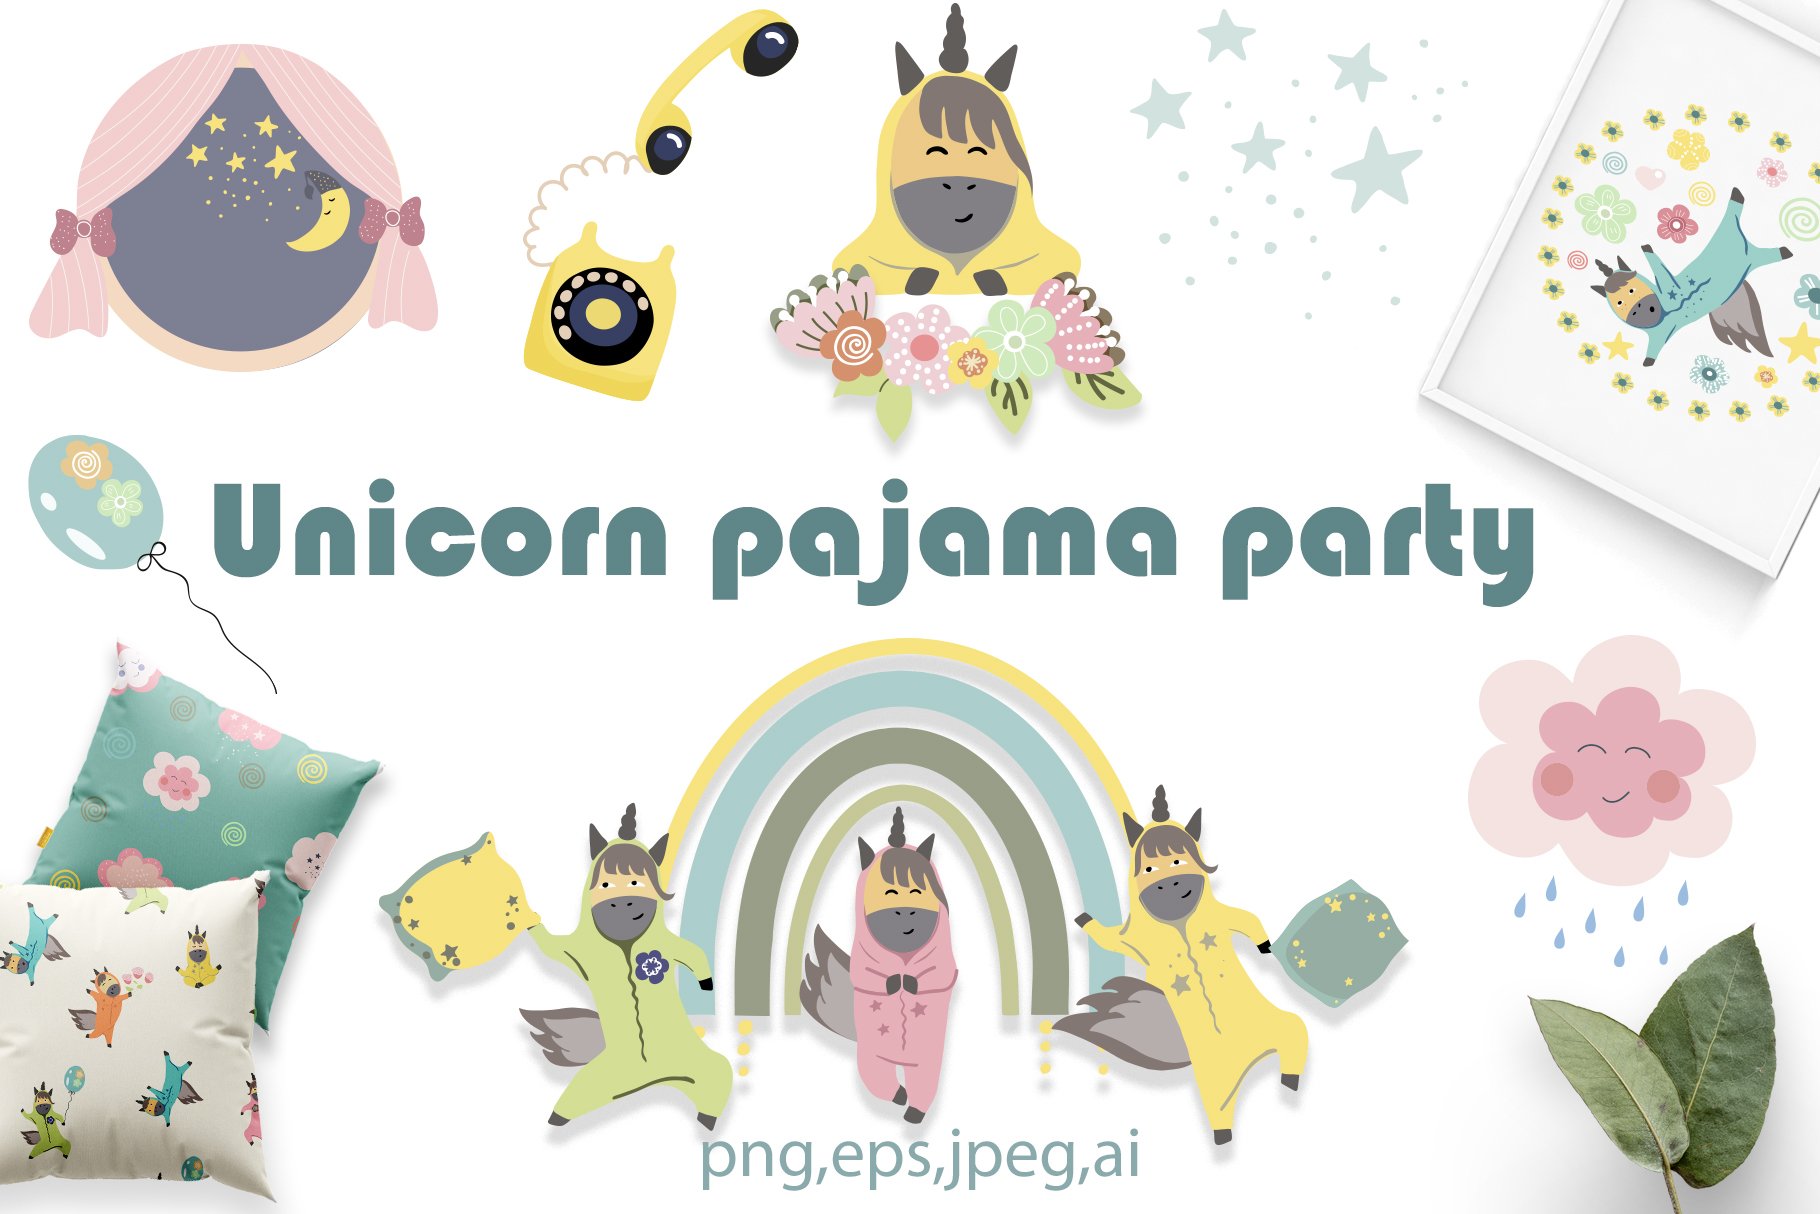 Unicorn pajama party clipart cover image.